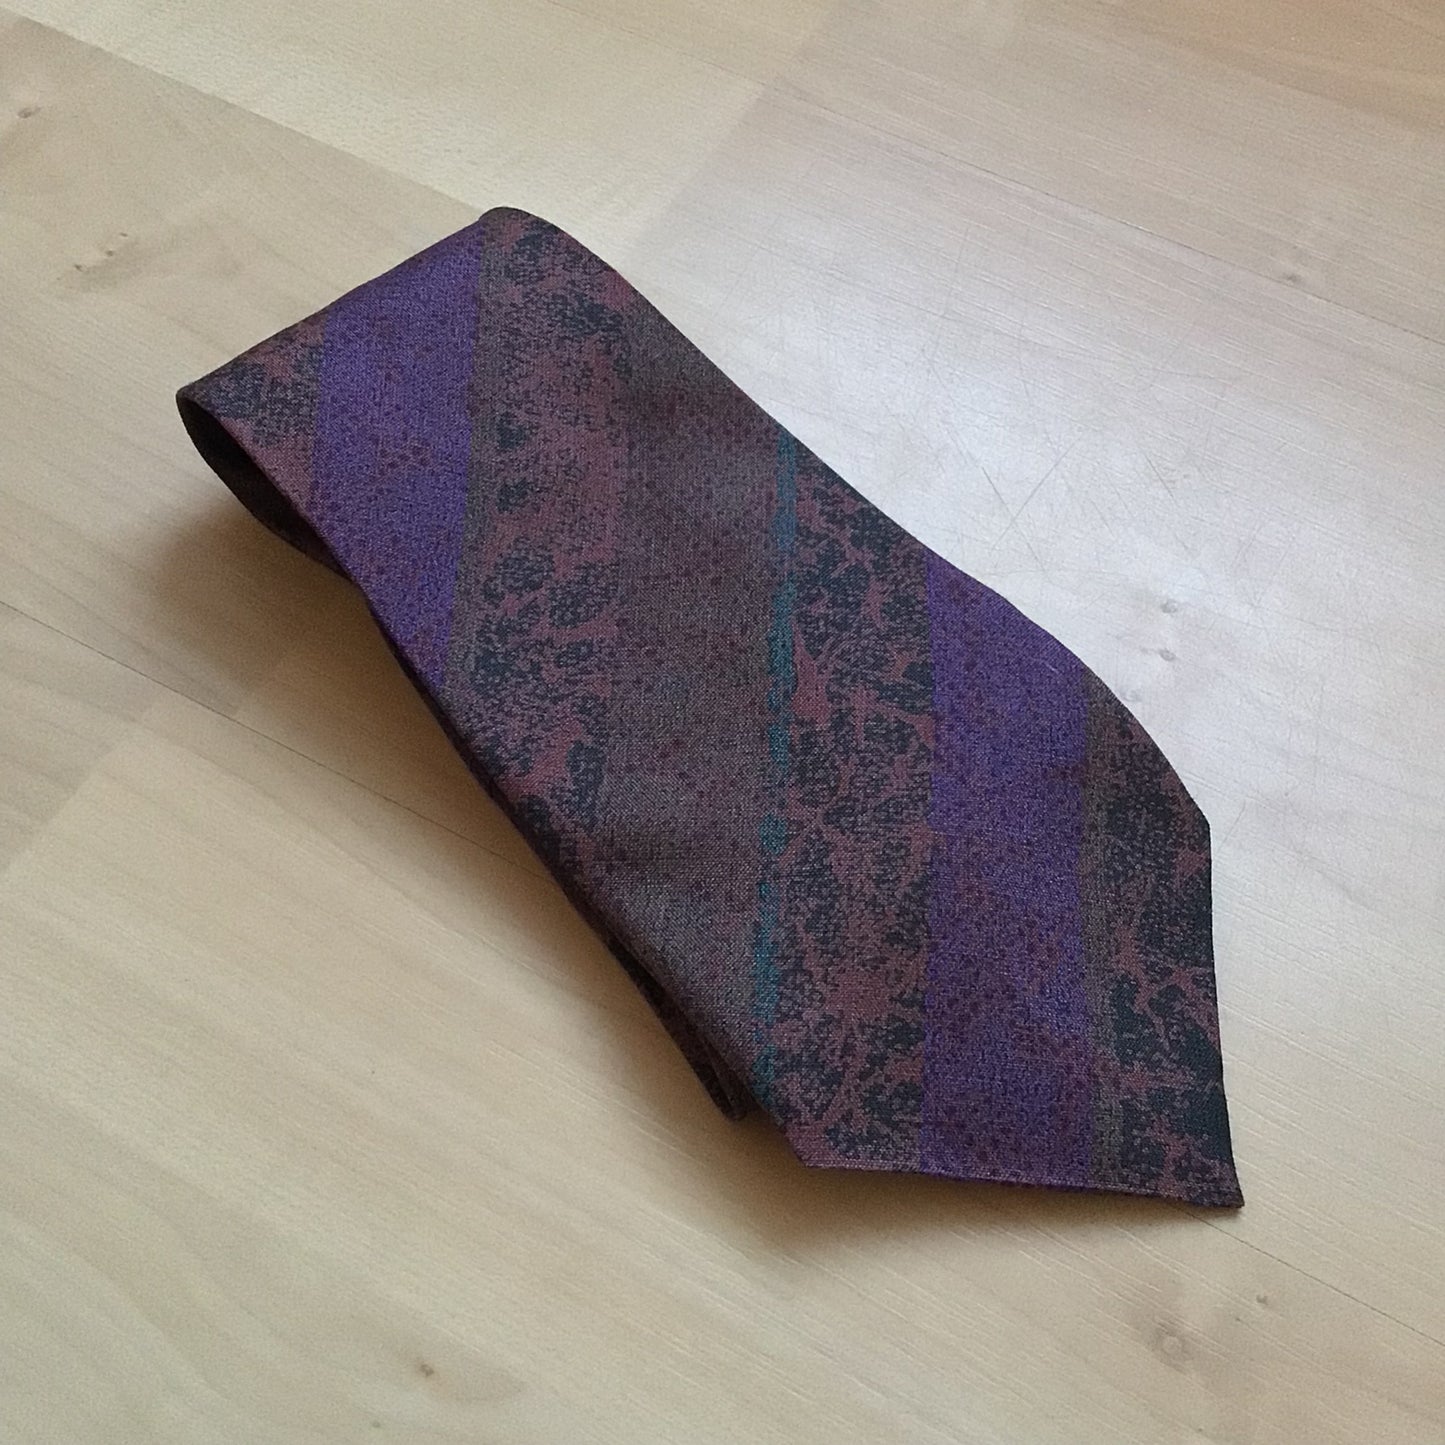 Harrods Made in England Multicoloured Purple All Silk Tie